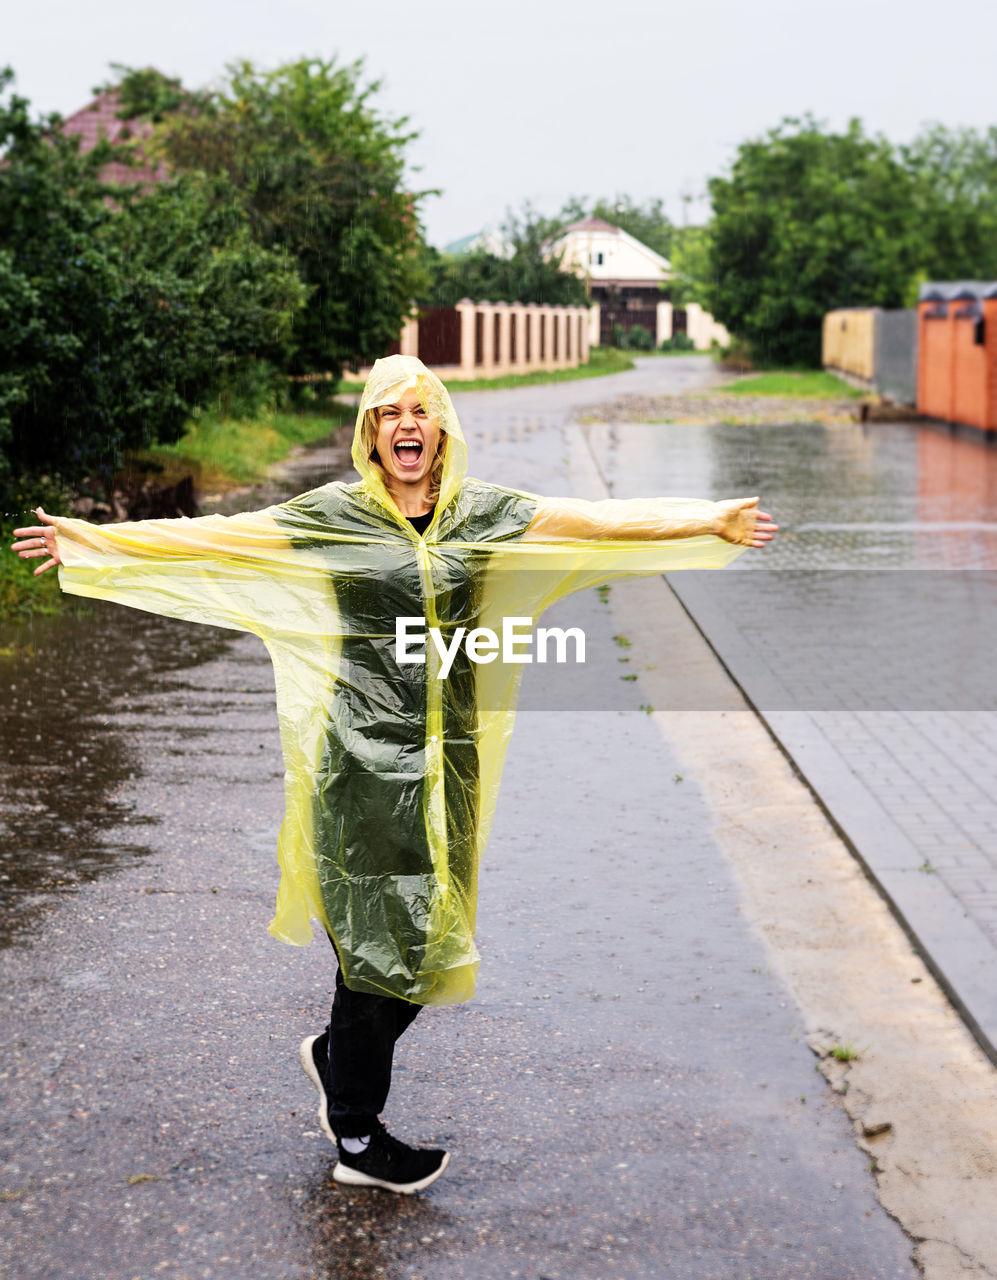 Portrait of woman wearing raincoat standing on road in rainy season